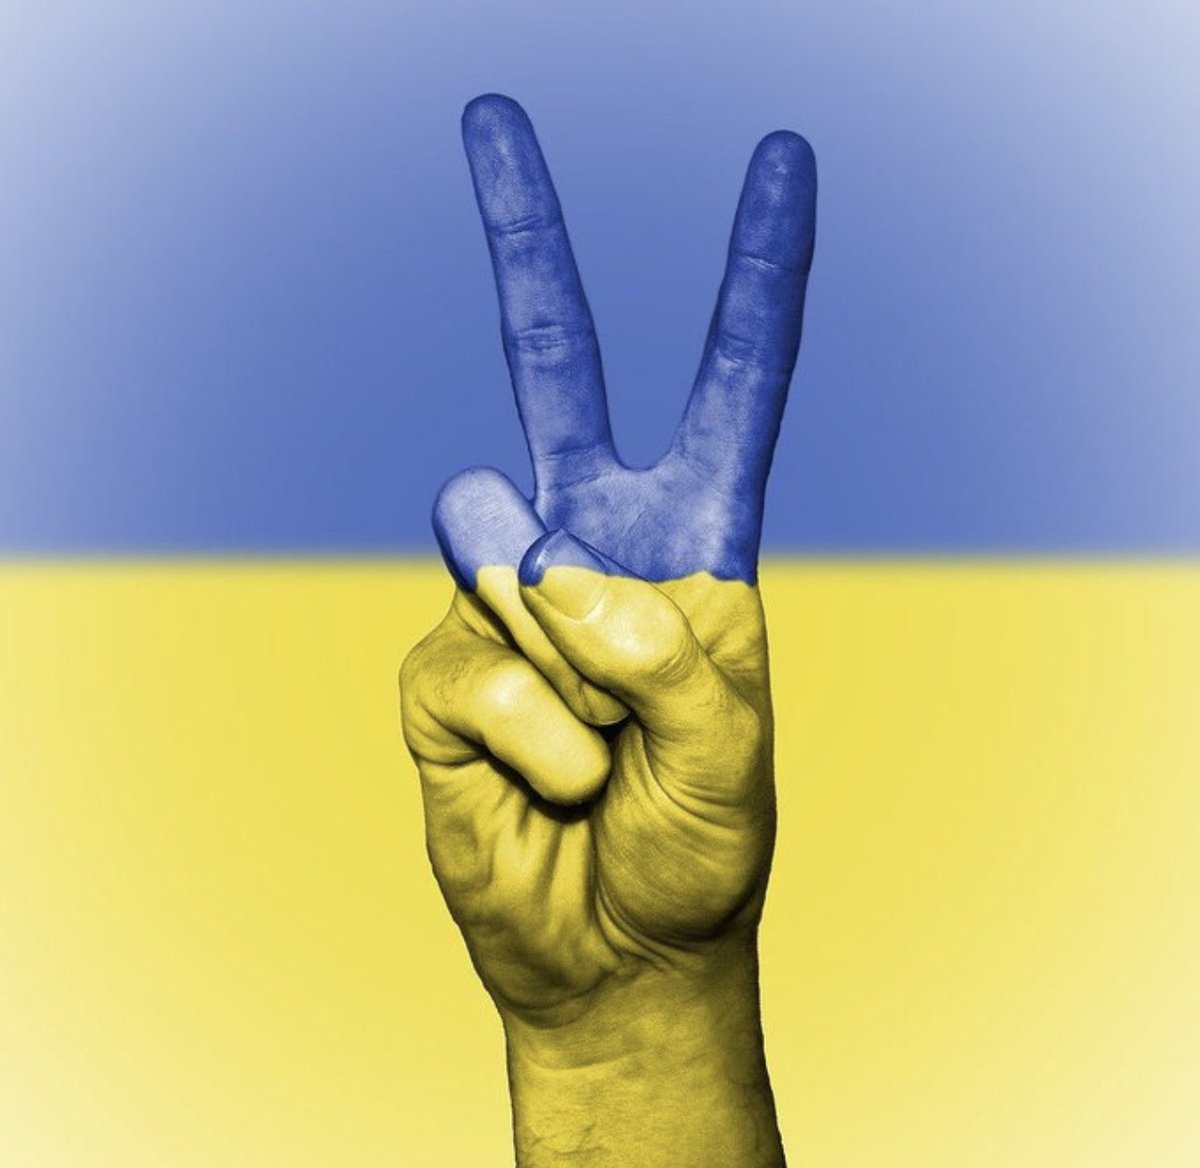 #StopRussianAggression #StandWithUkraine 🇺🇦